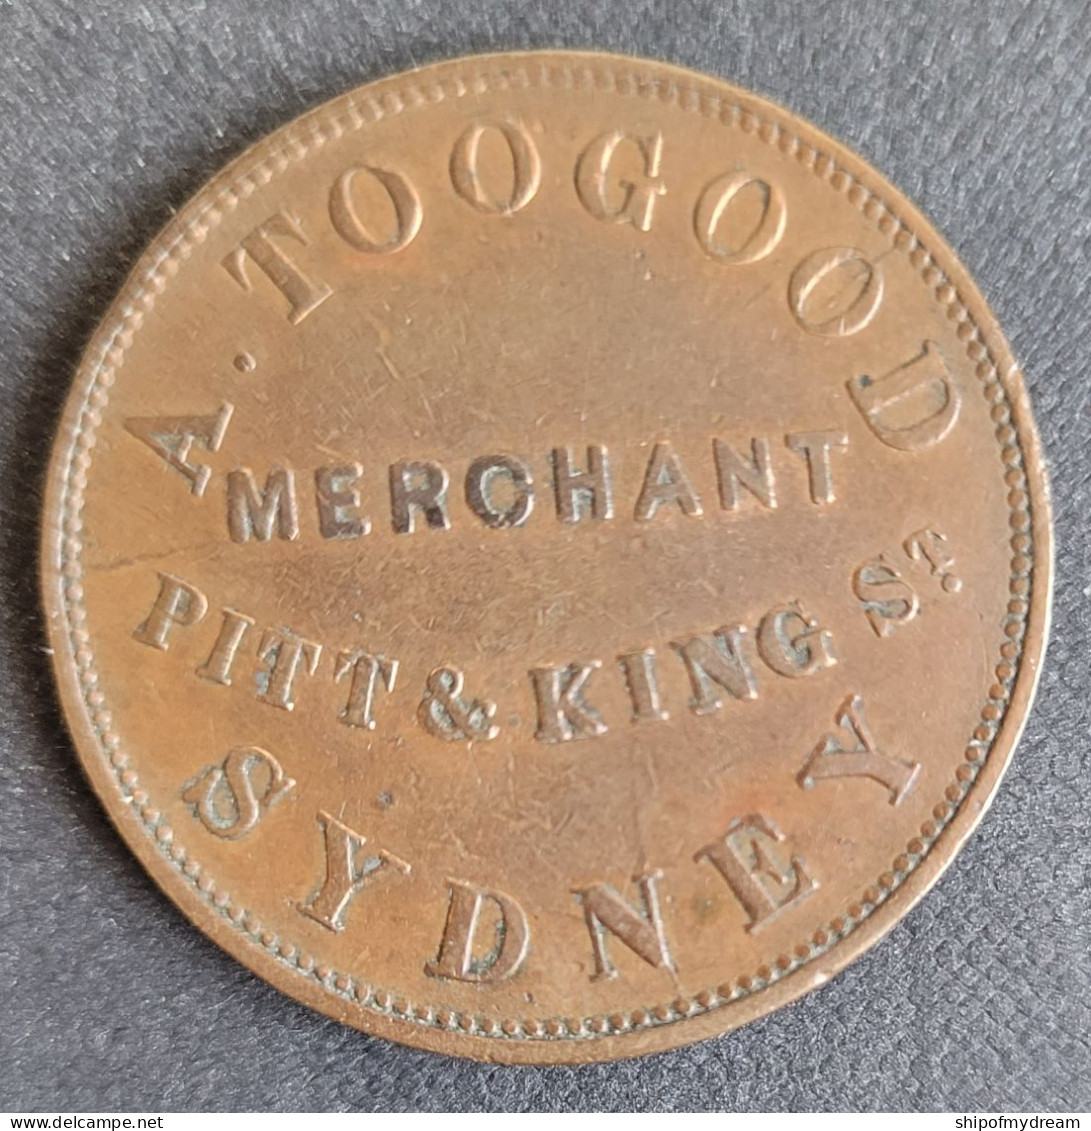 Australia Penny 1855 Tn256, A. Toogood Pitt & King St Merchant Sydney. High CV. - Fichas (Prisioneros De Guerra)